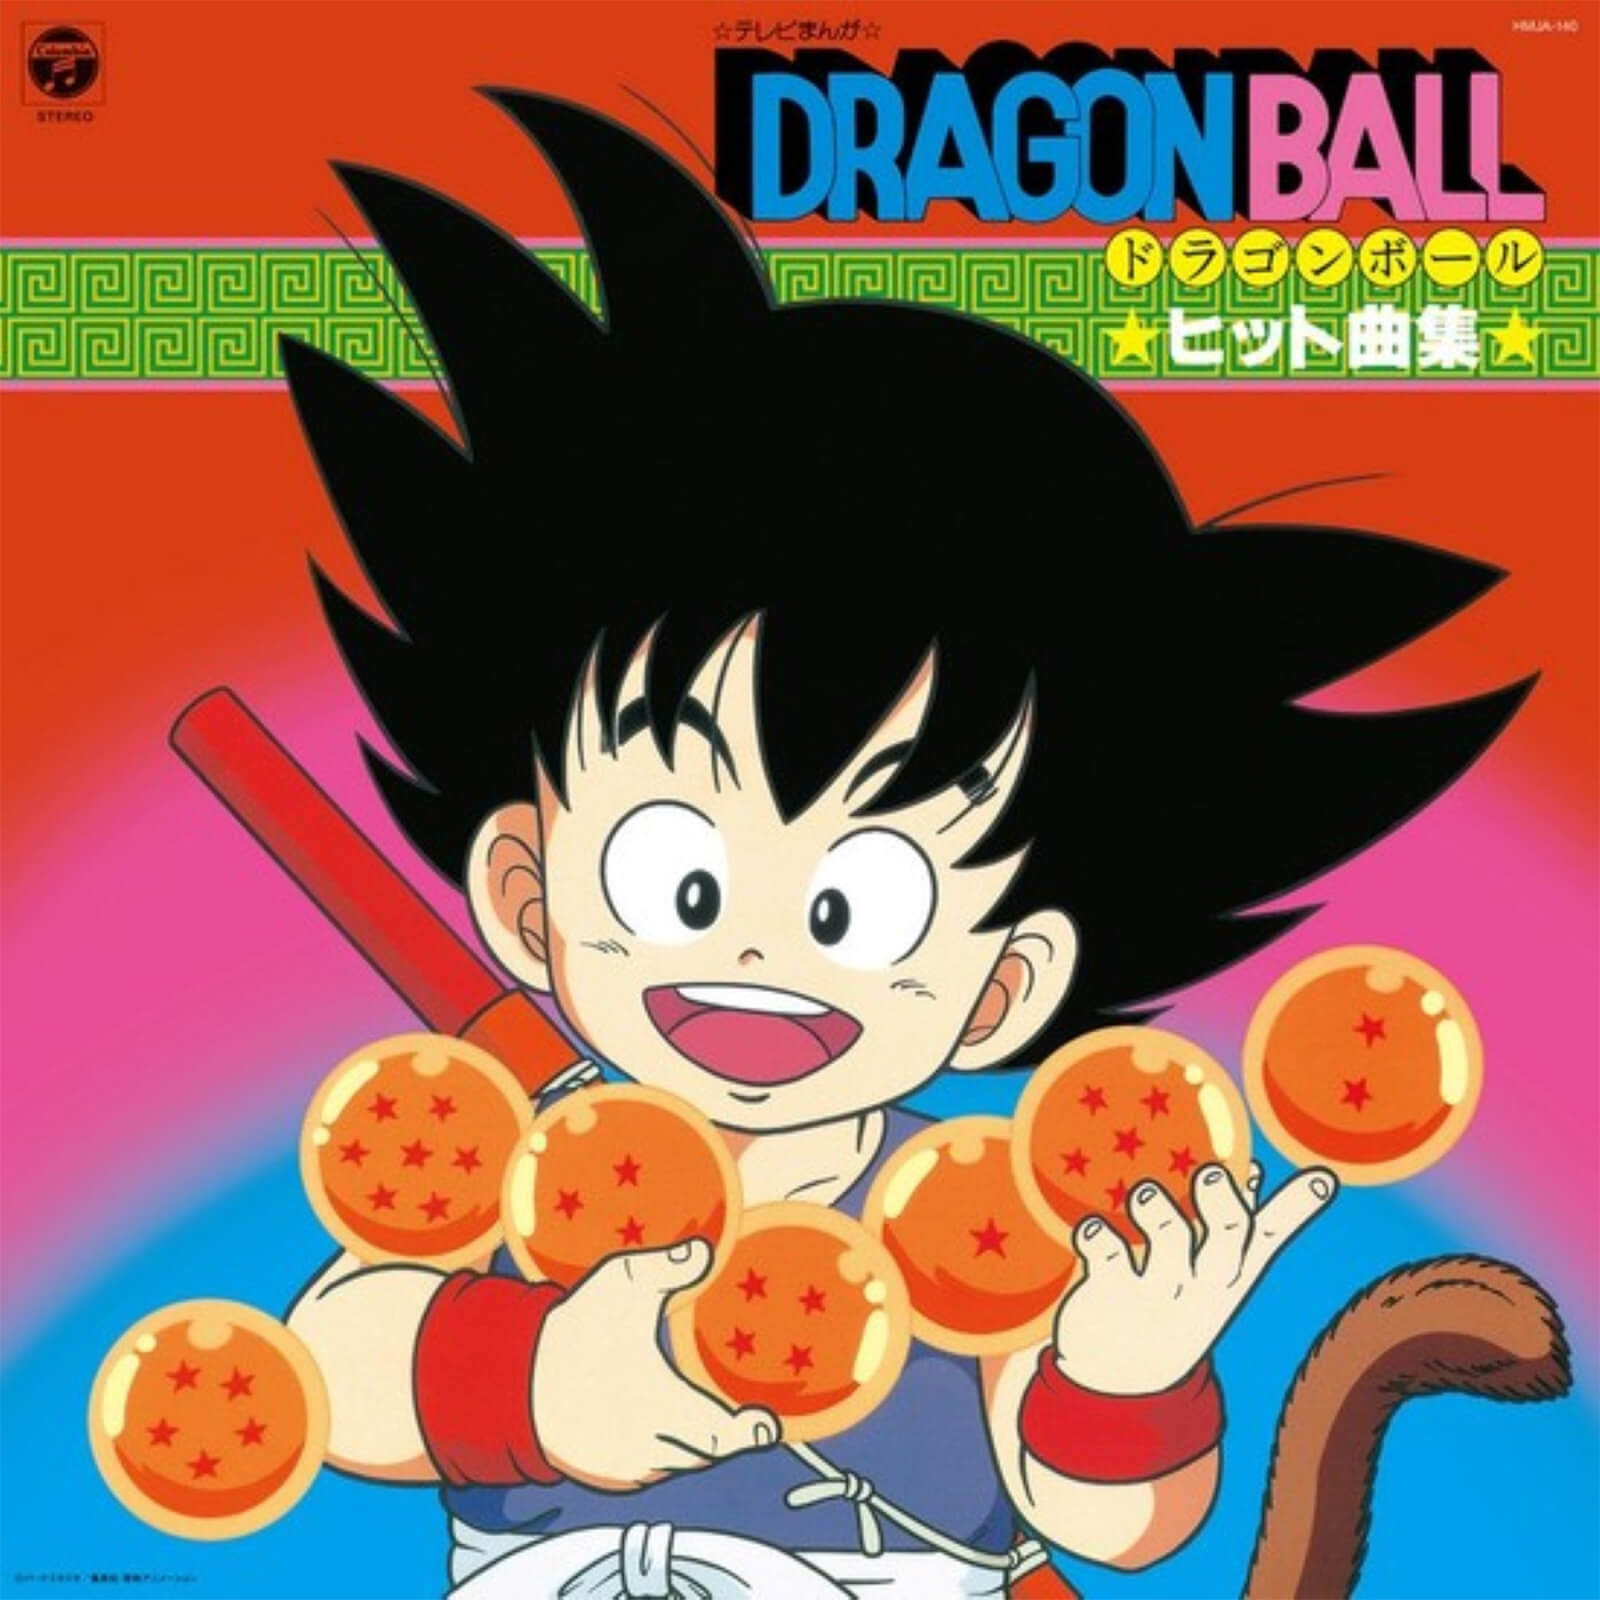 Hmv Record Shop - Tv manga dragon ball hit song collection lp